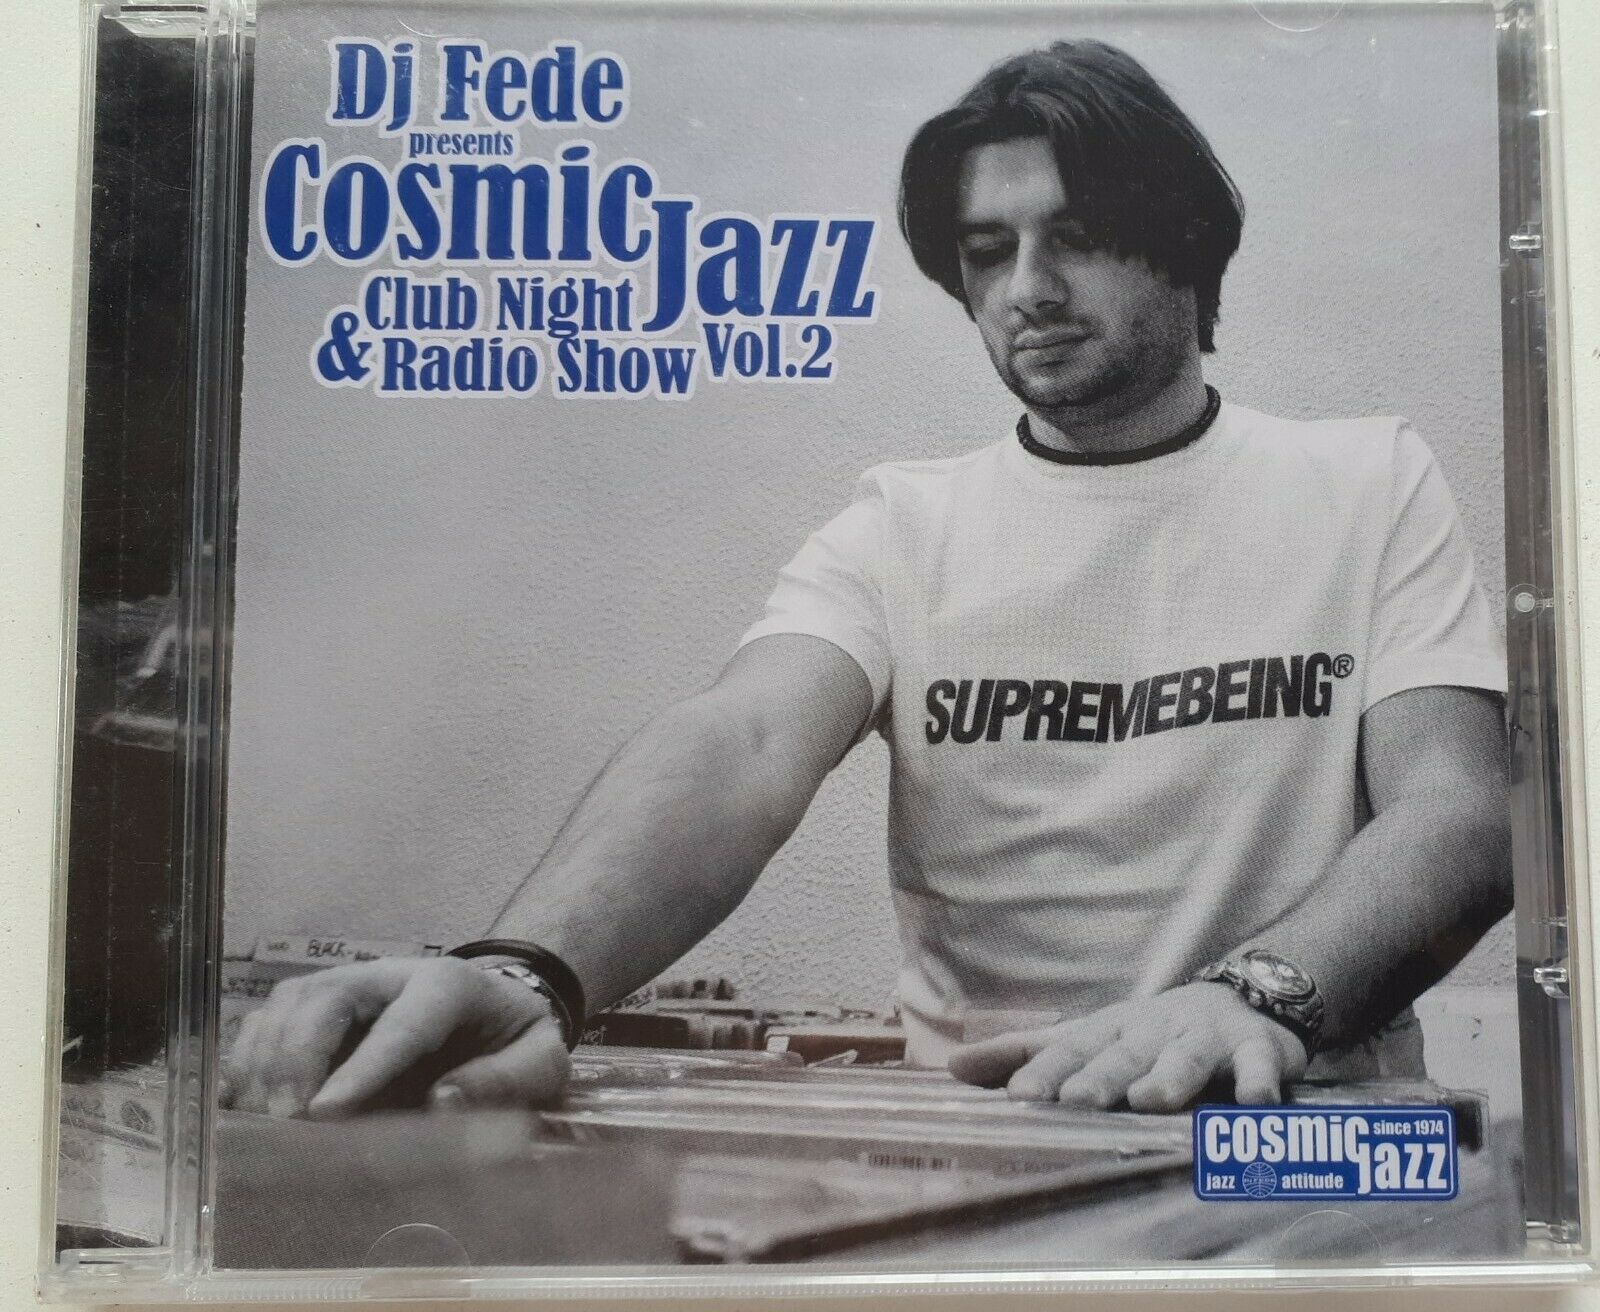 DJ Fede - Presents Cosmic Jazz Vol. 2 Club Night & Radio Show